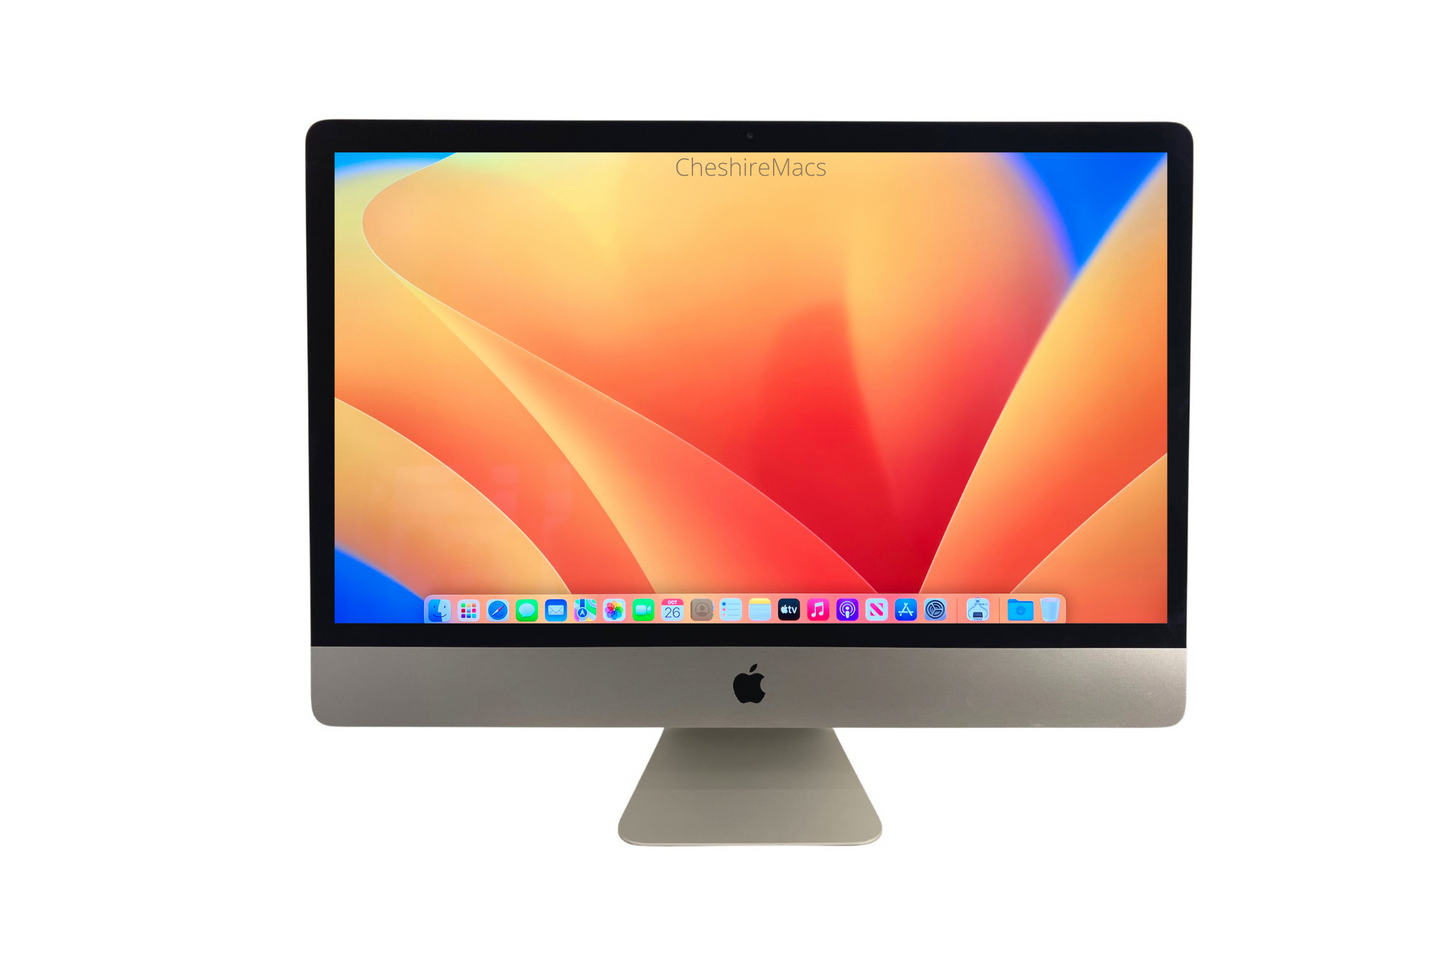 iMac 21.5 inch 4K Core i5 3.4Ghz, 8gb, 1TB Fusion Hard Drive (2017)